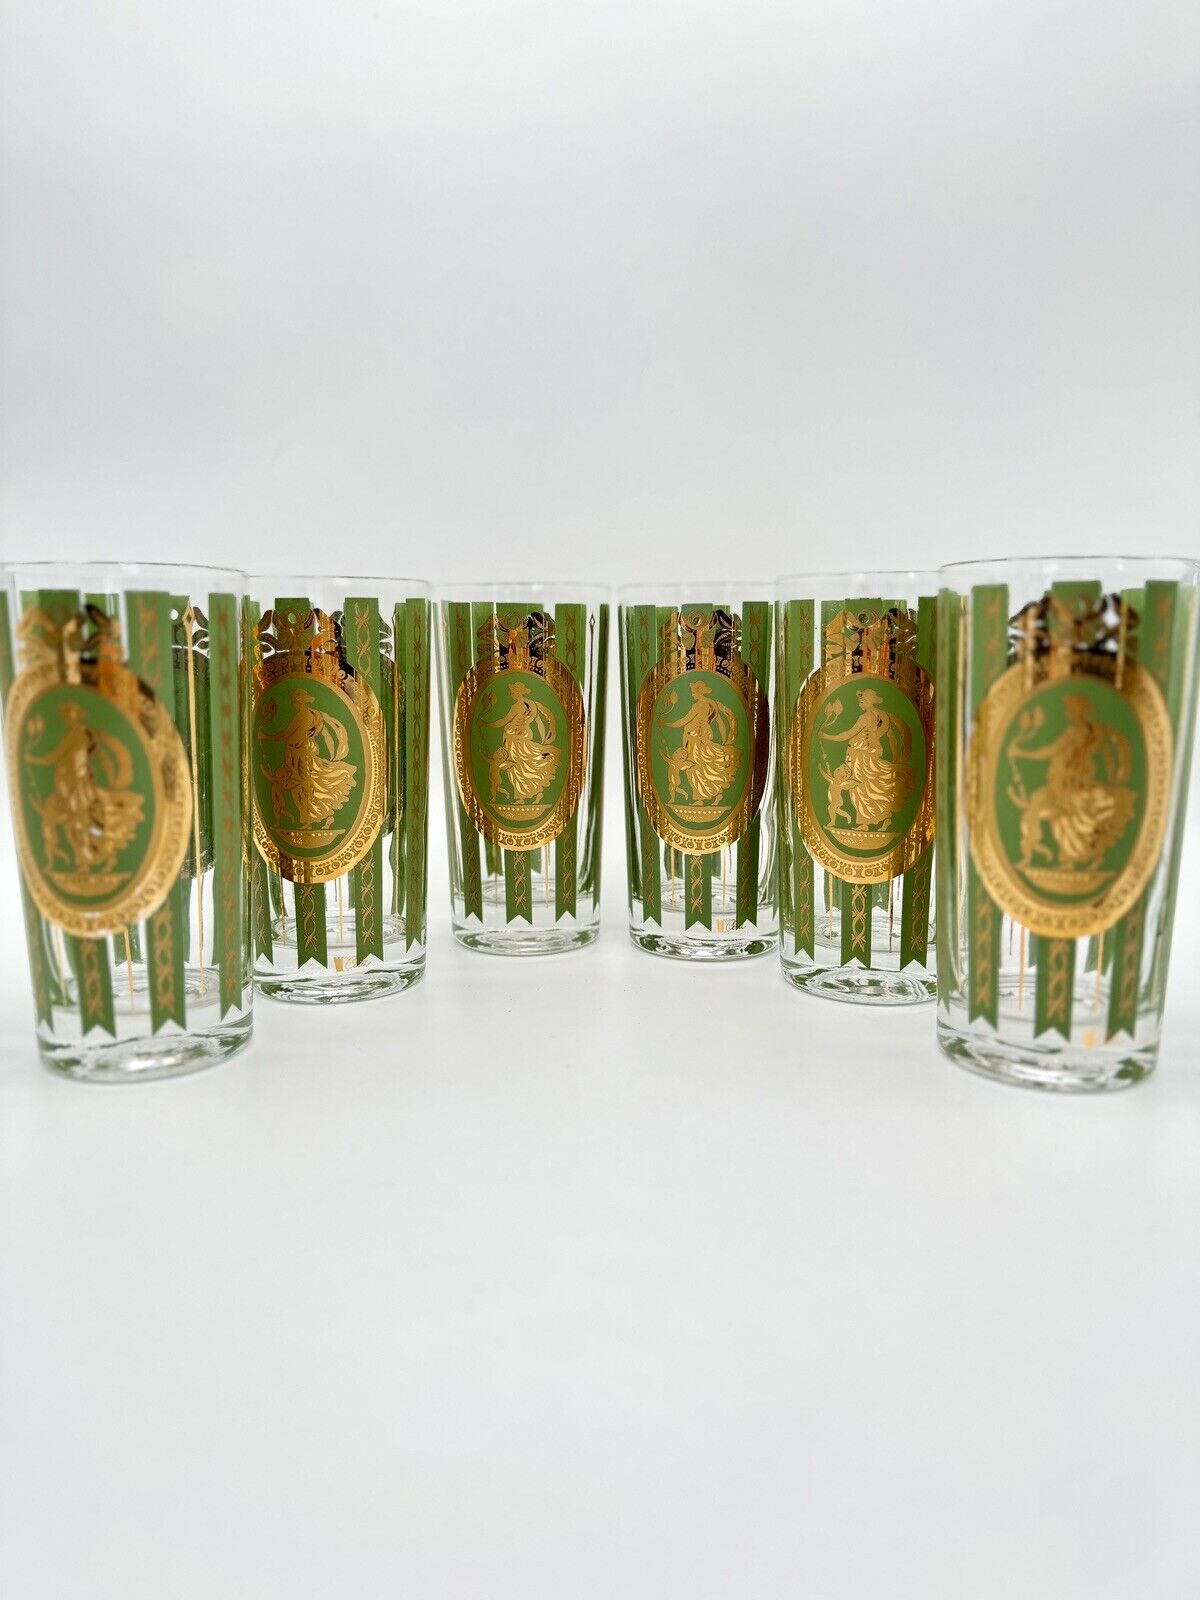 Cera Cora Athena Cupid Flat Tumbler Glass VTG 1950's 22k Gold Lot of 6 Barware